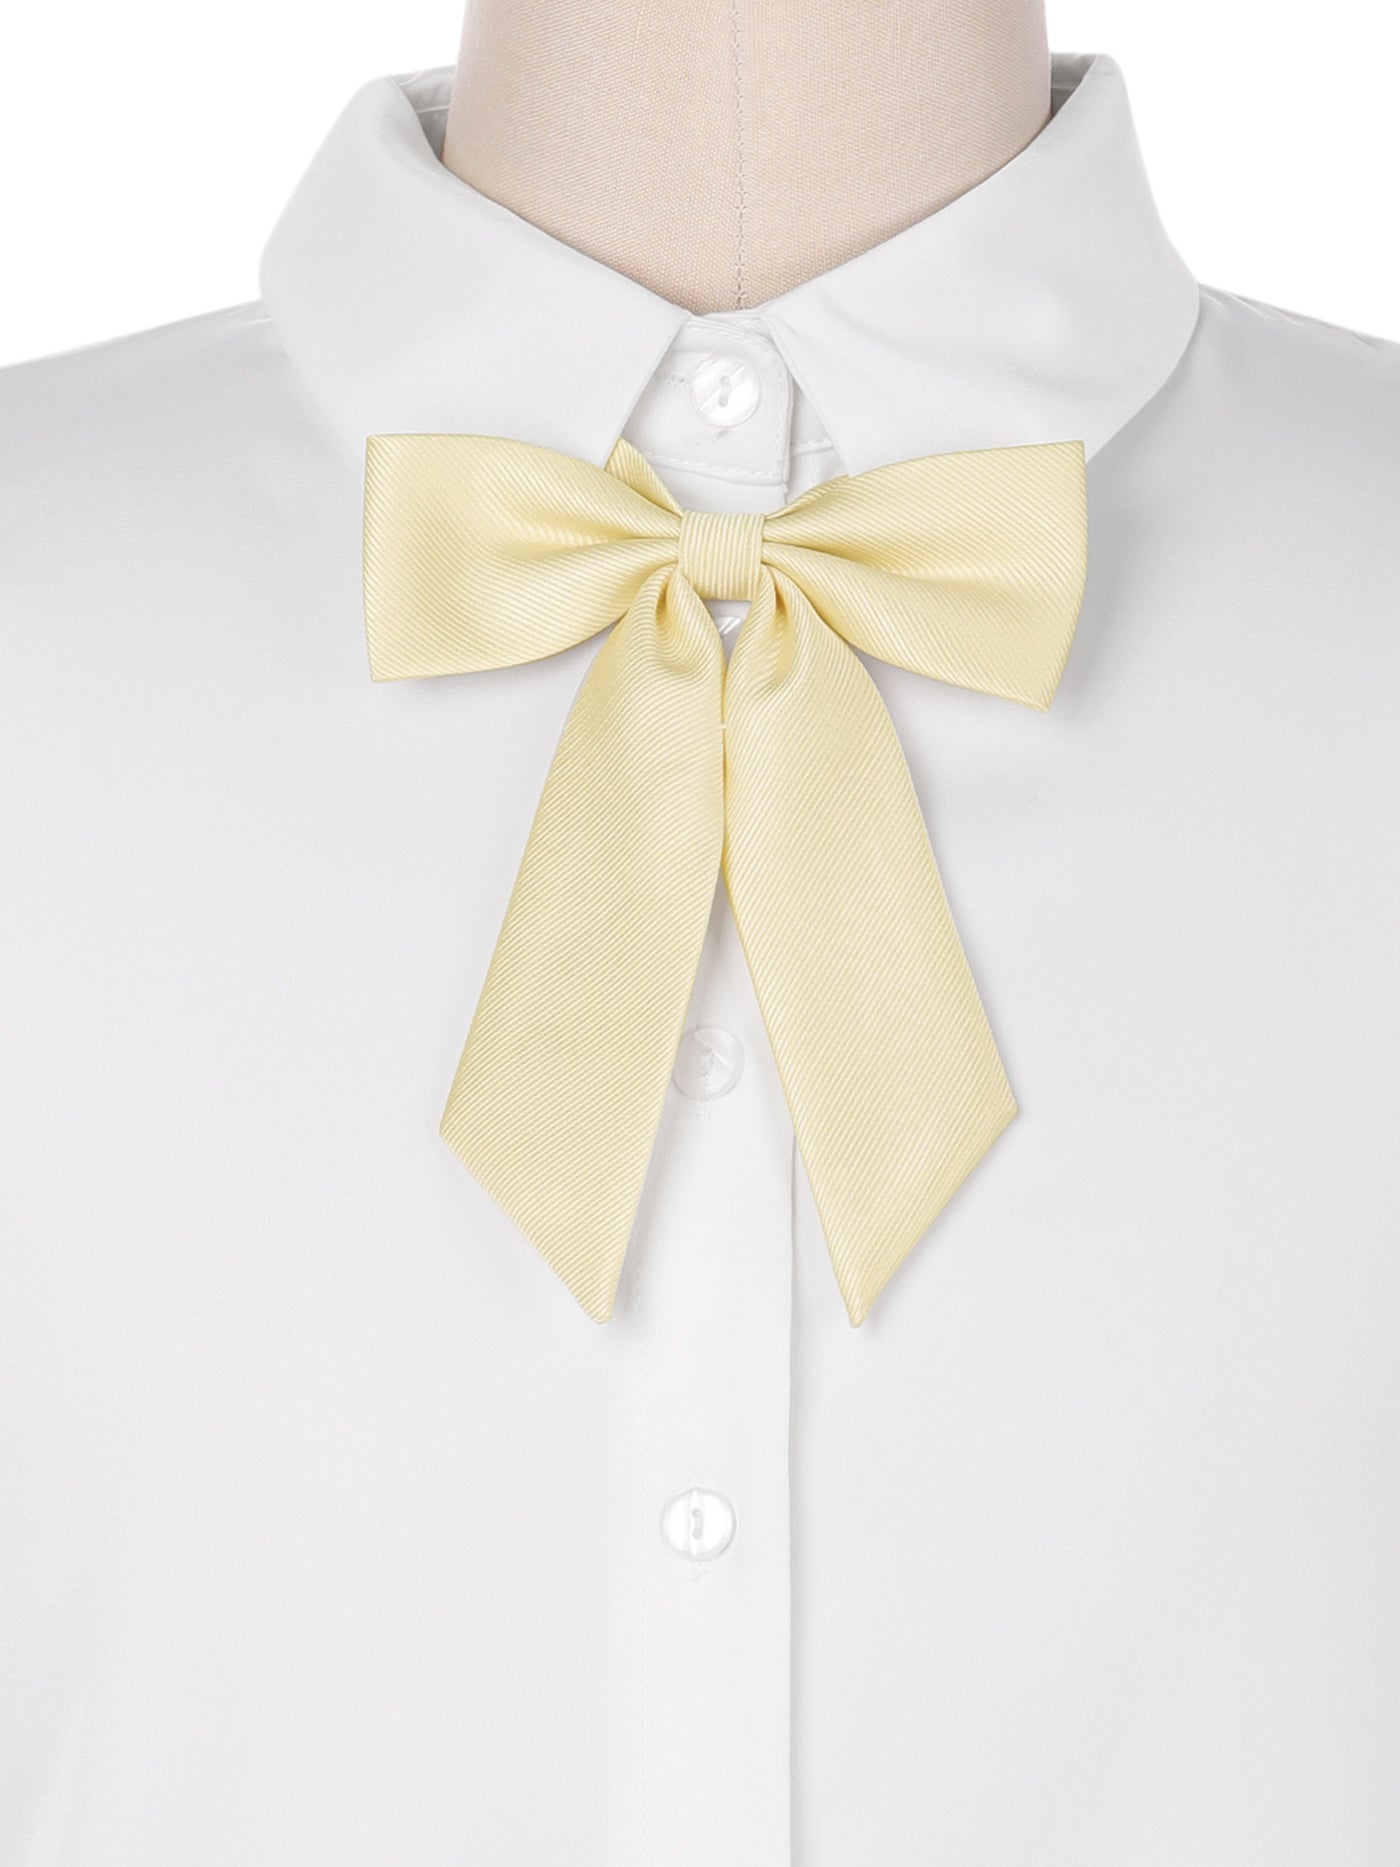 Bublédon Women's Bow Ties Solid Color Western Ribbon Pre-Tied Bowties for School Uniform